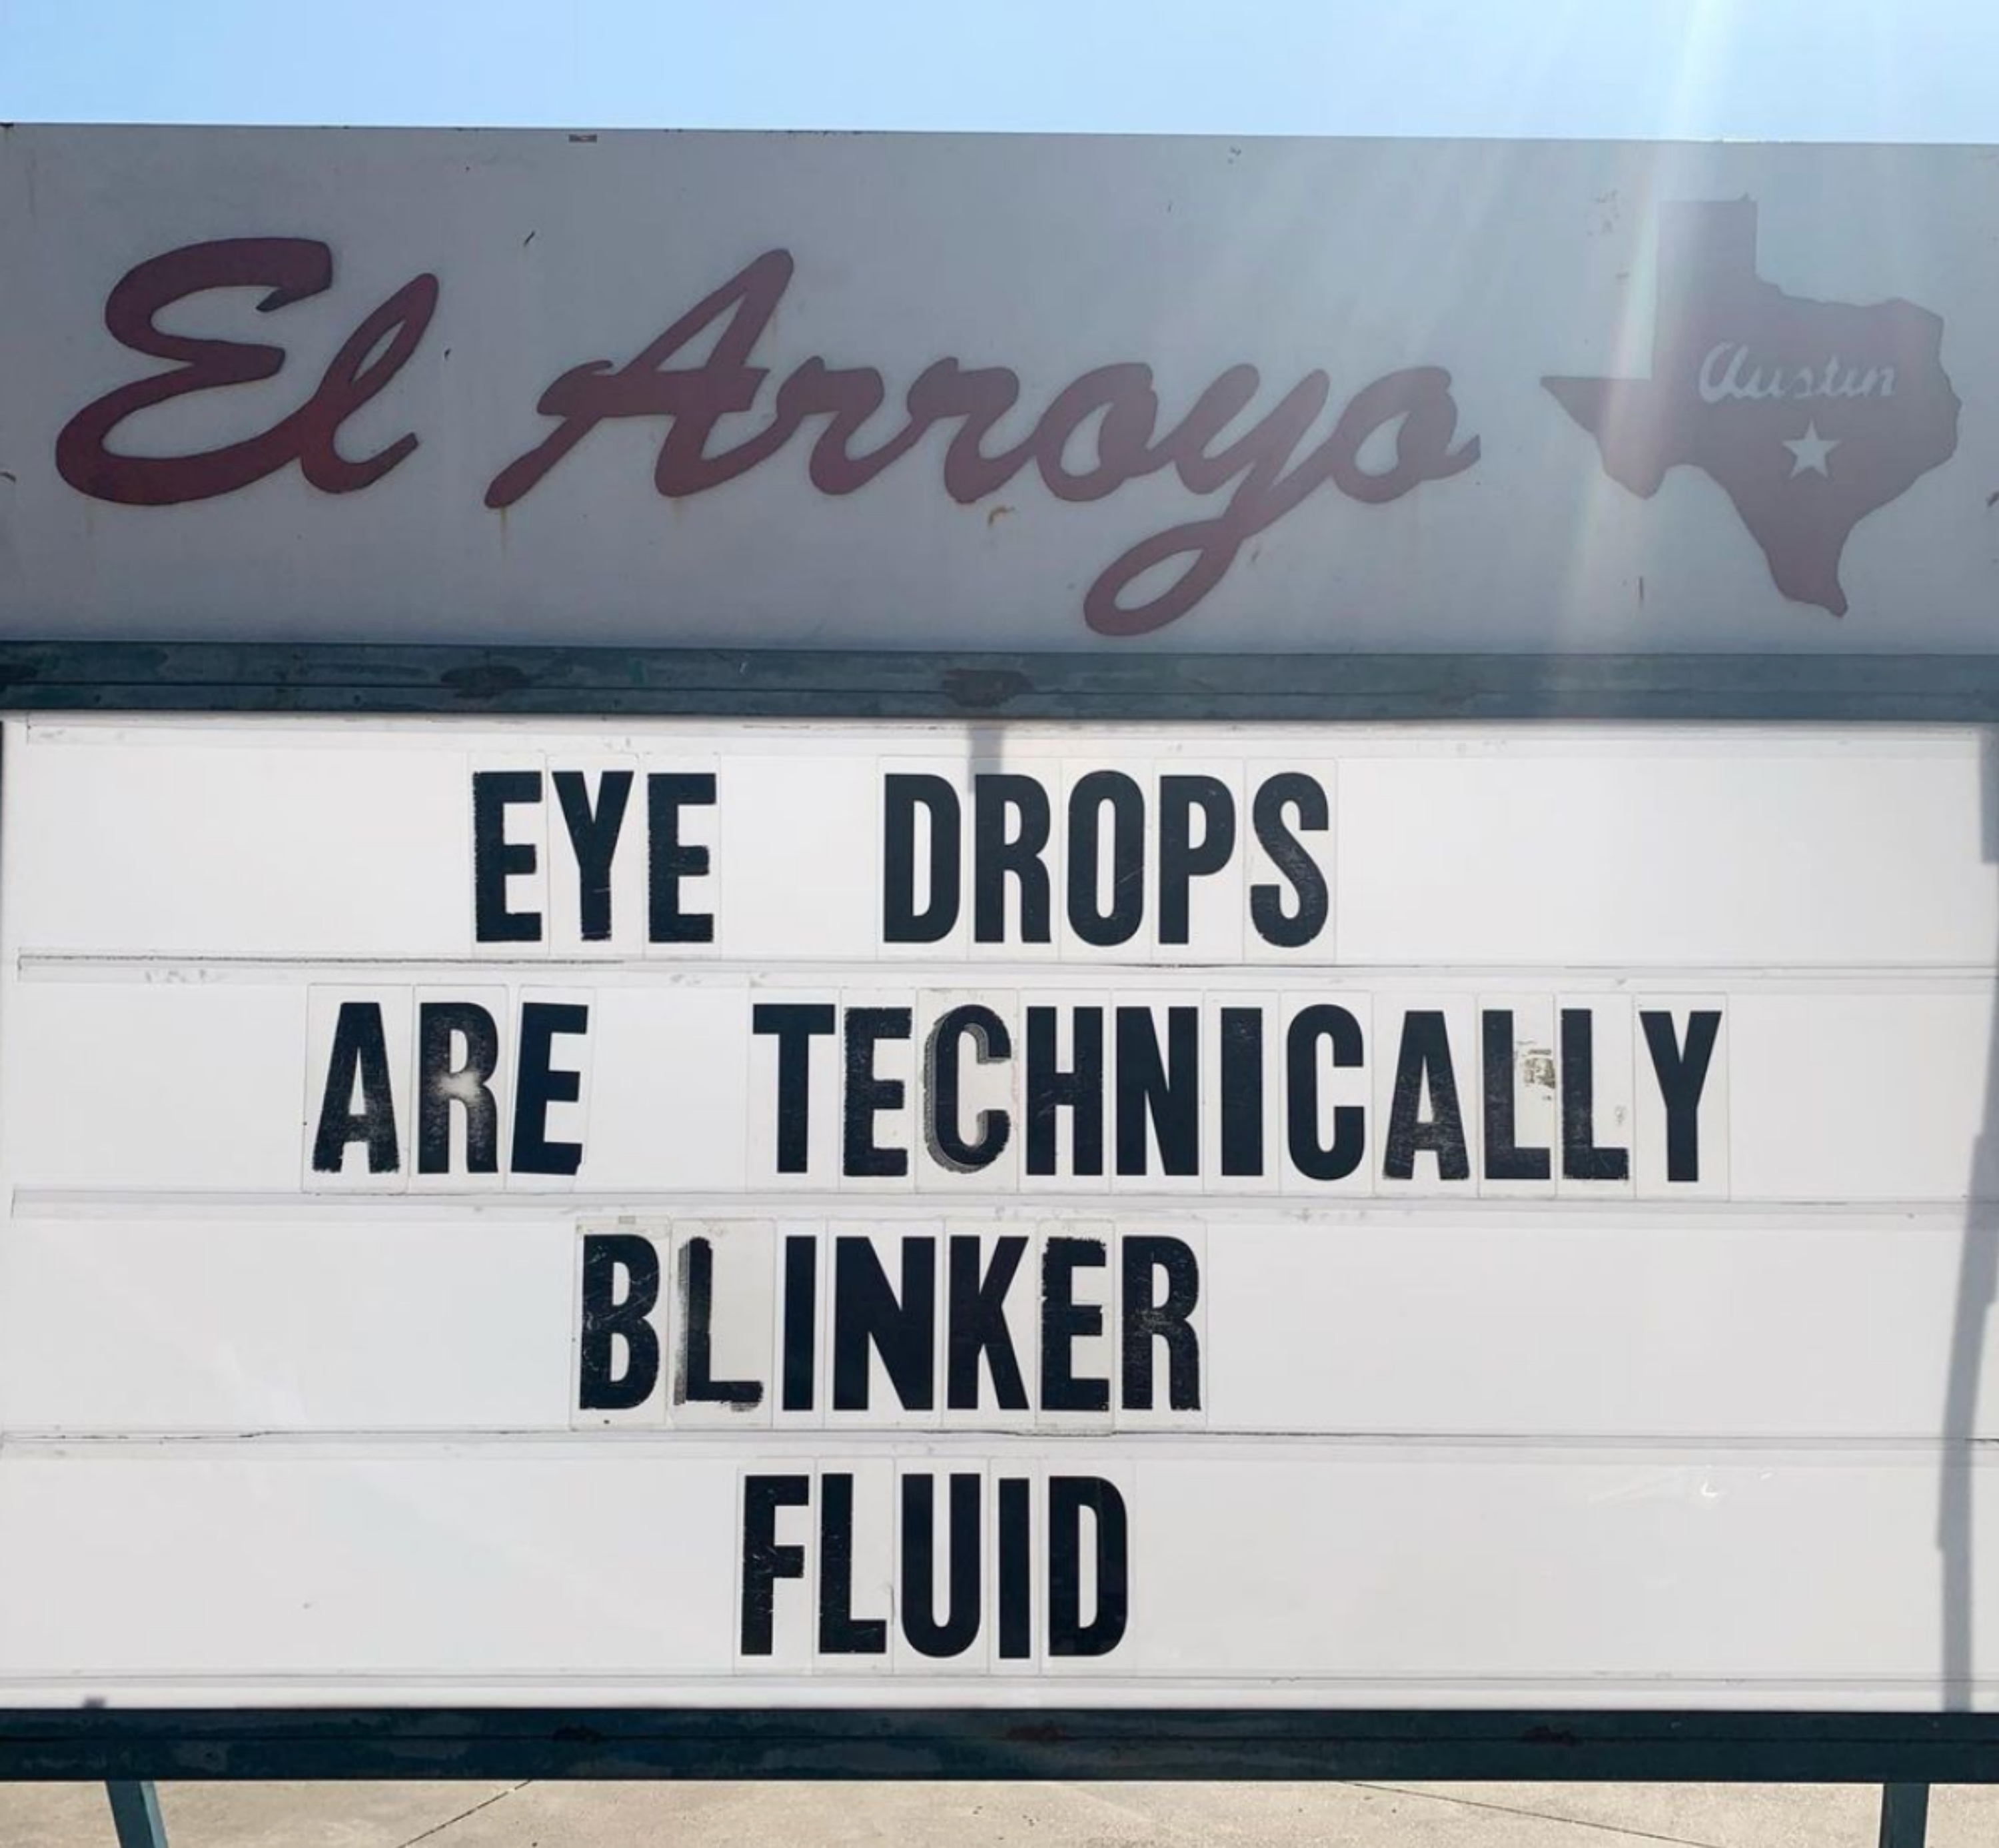 funny joke sign about eye drops and blinker fluid